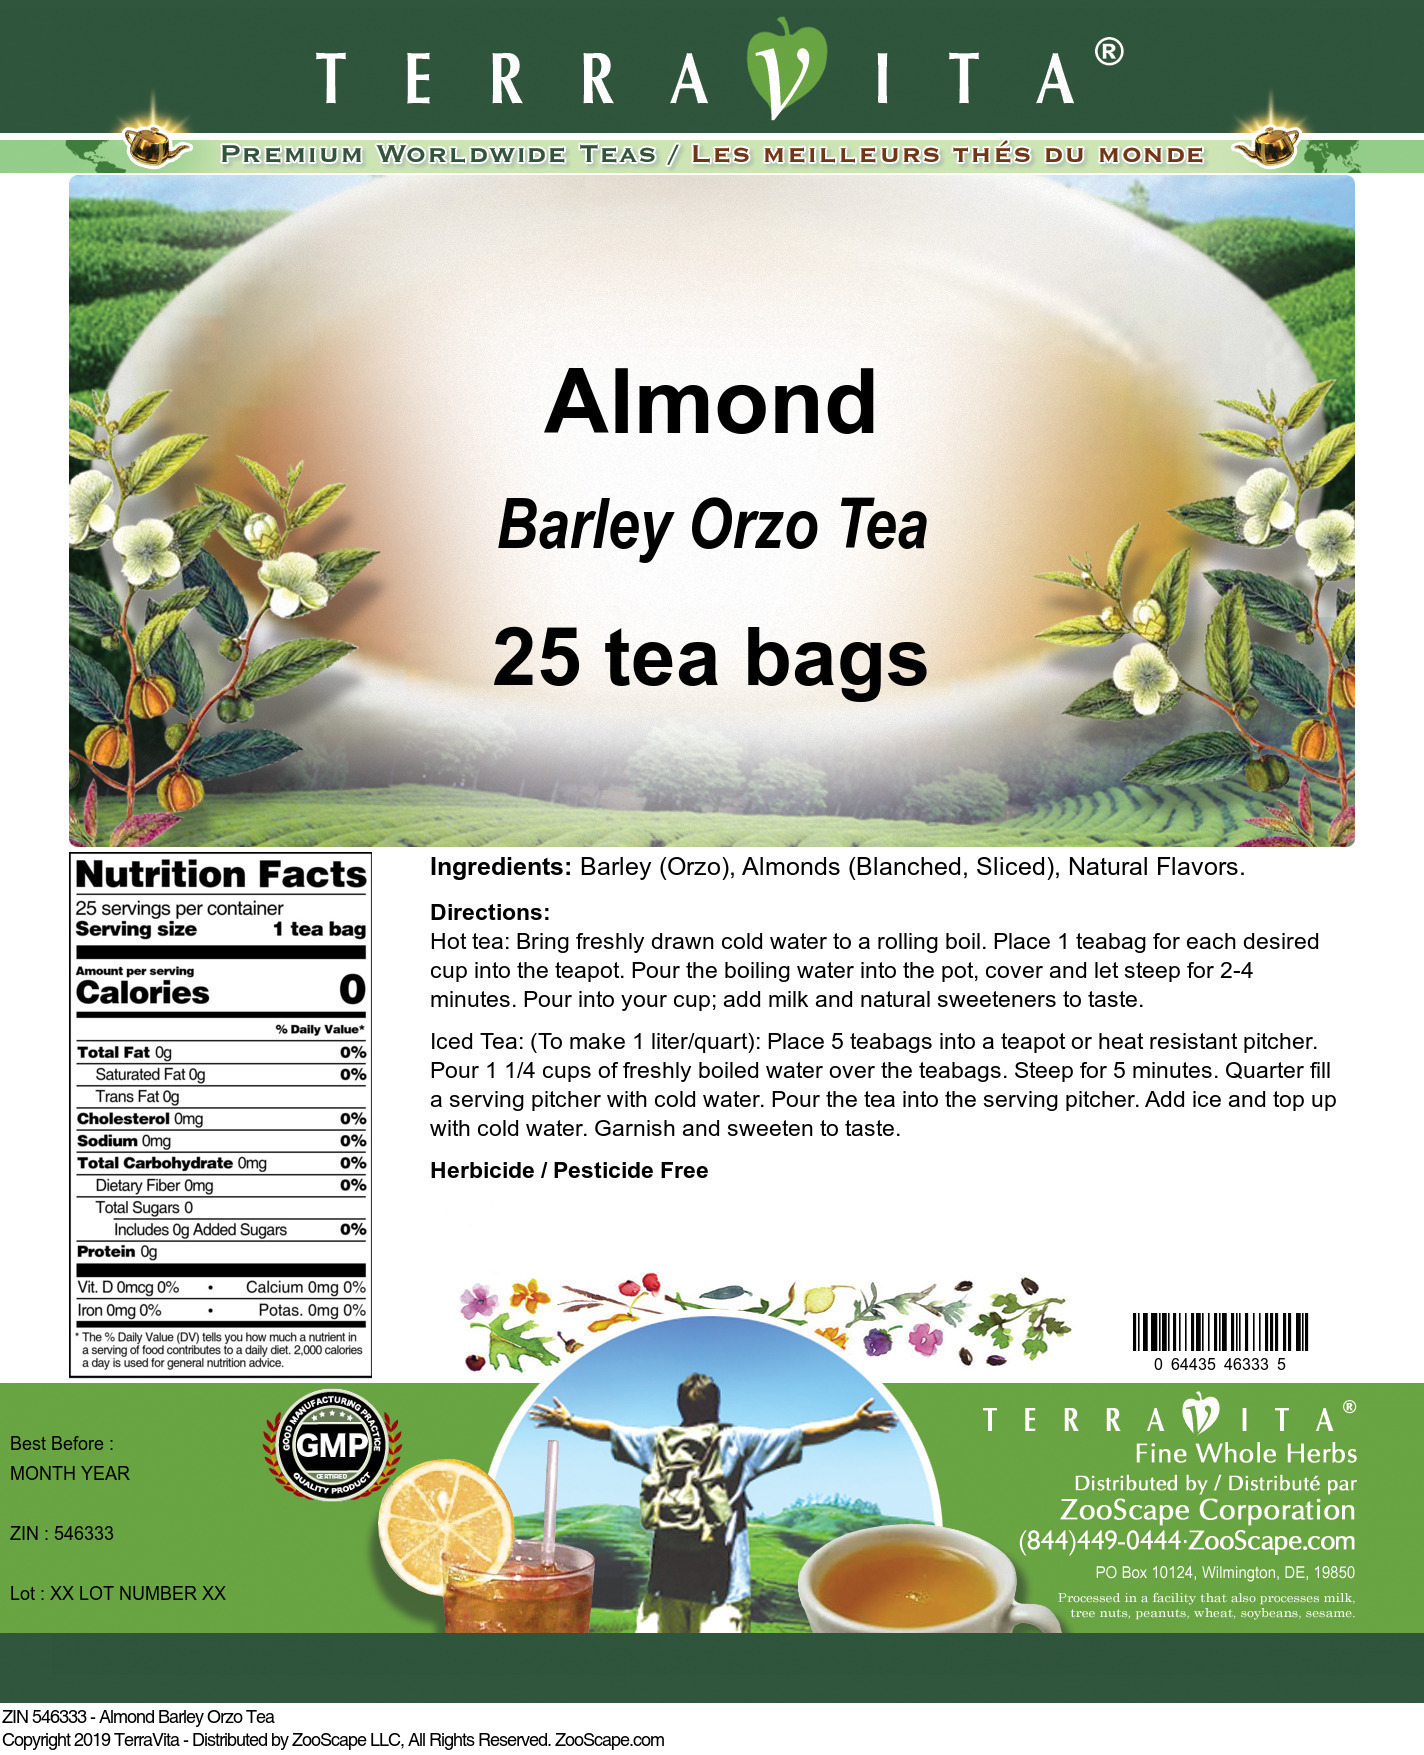 Almond Barley Orzo Tea - Label